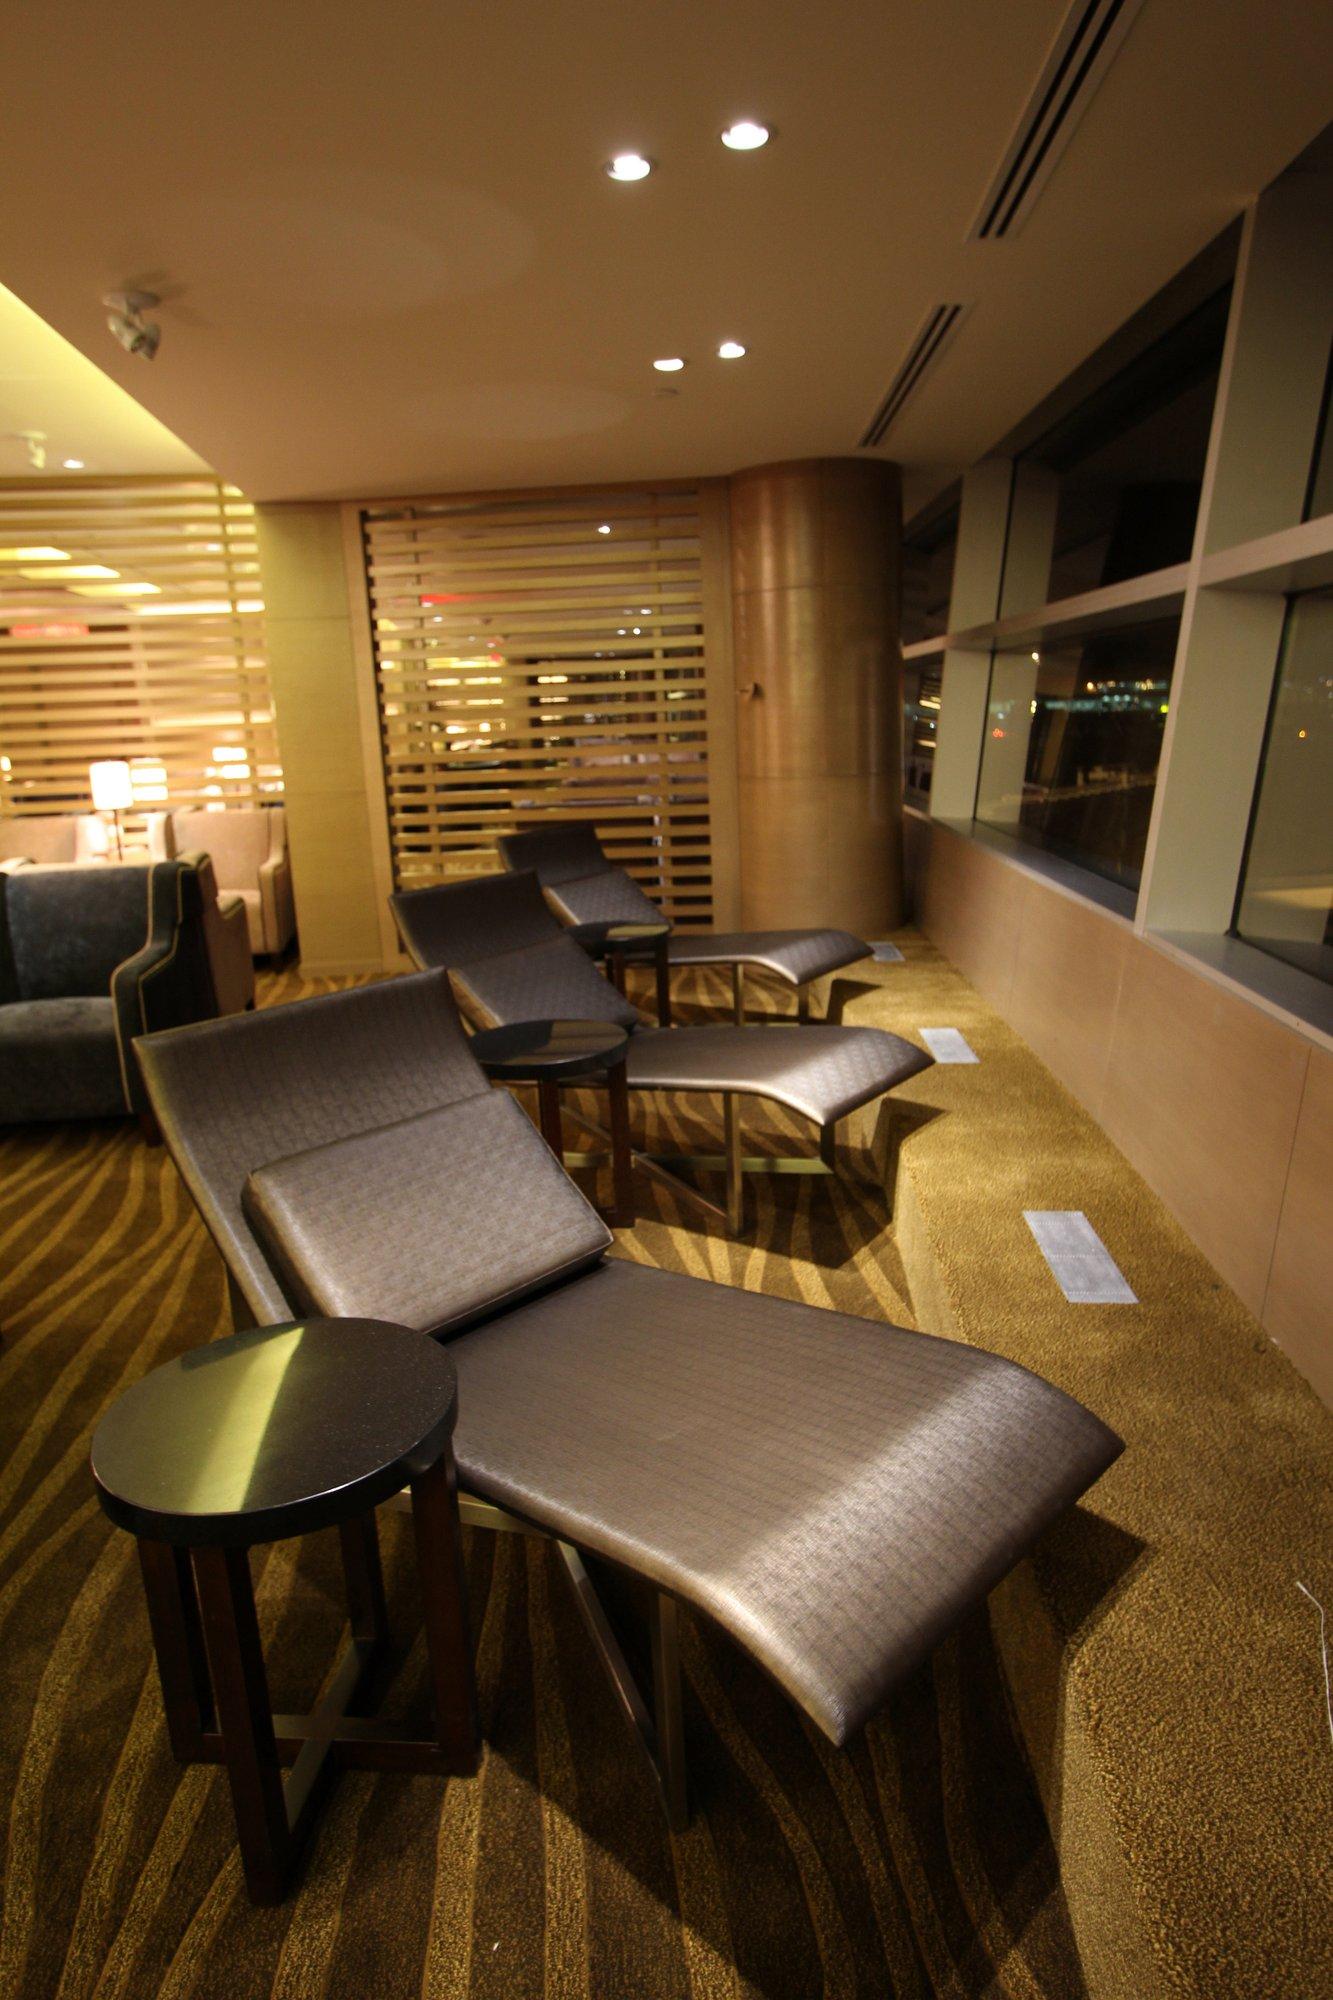 Plaza Premium Lounge image 43 of 48